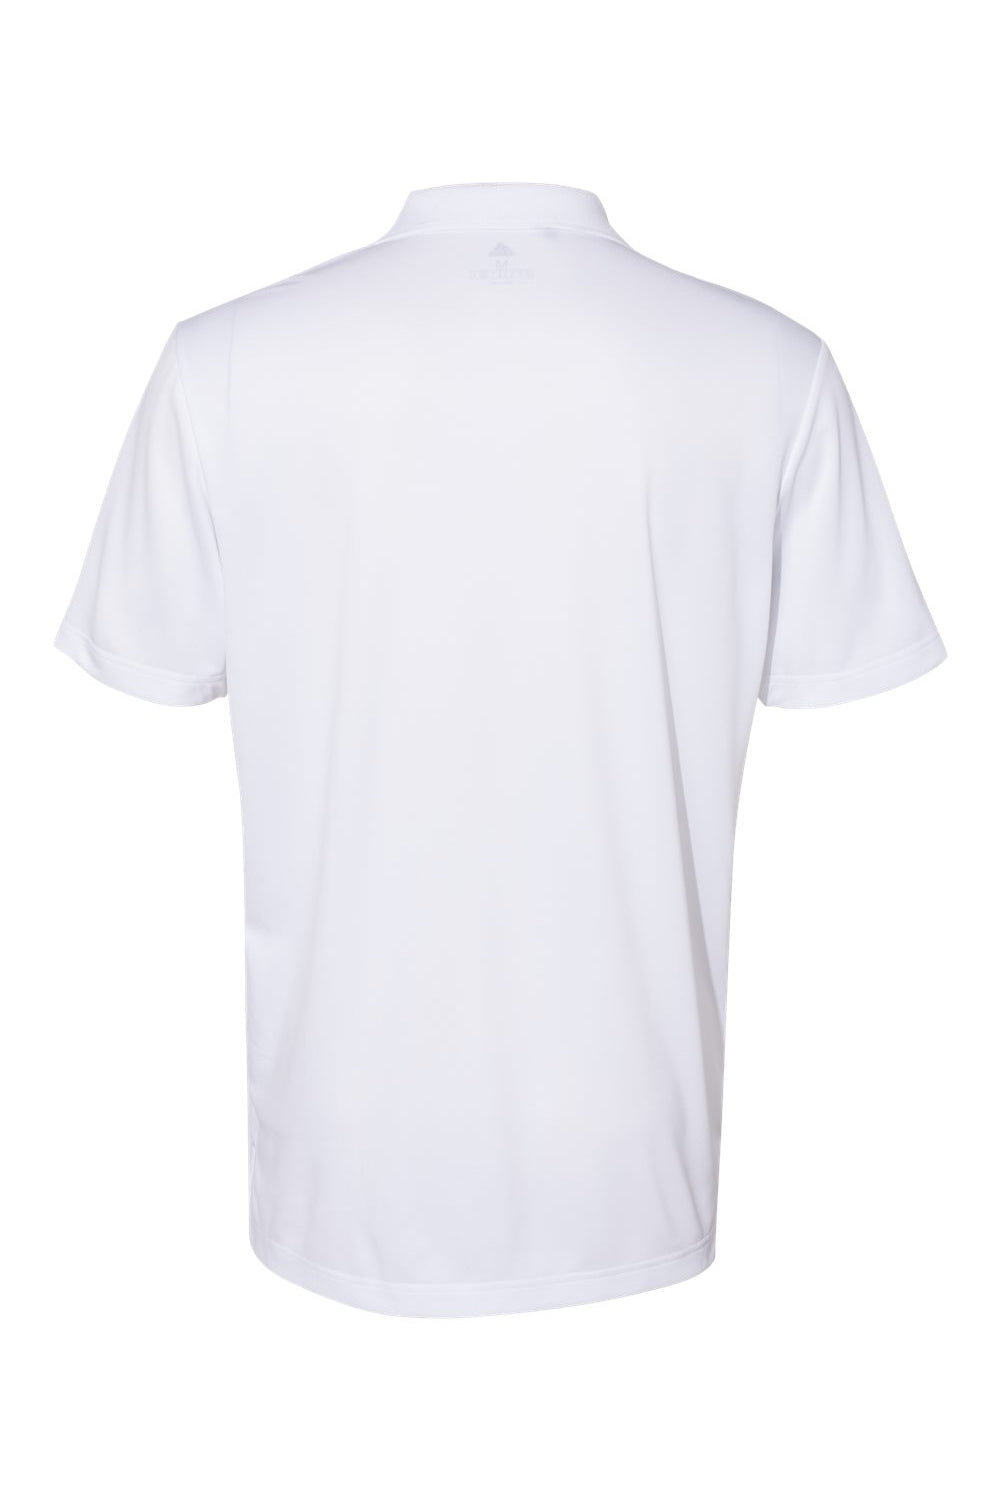 Adidas A230 Mens Performance Short Sleeve Polo Shirt White Flat Back